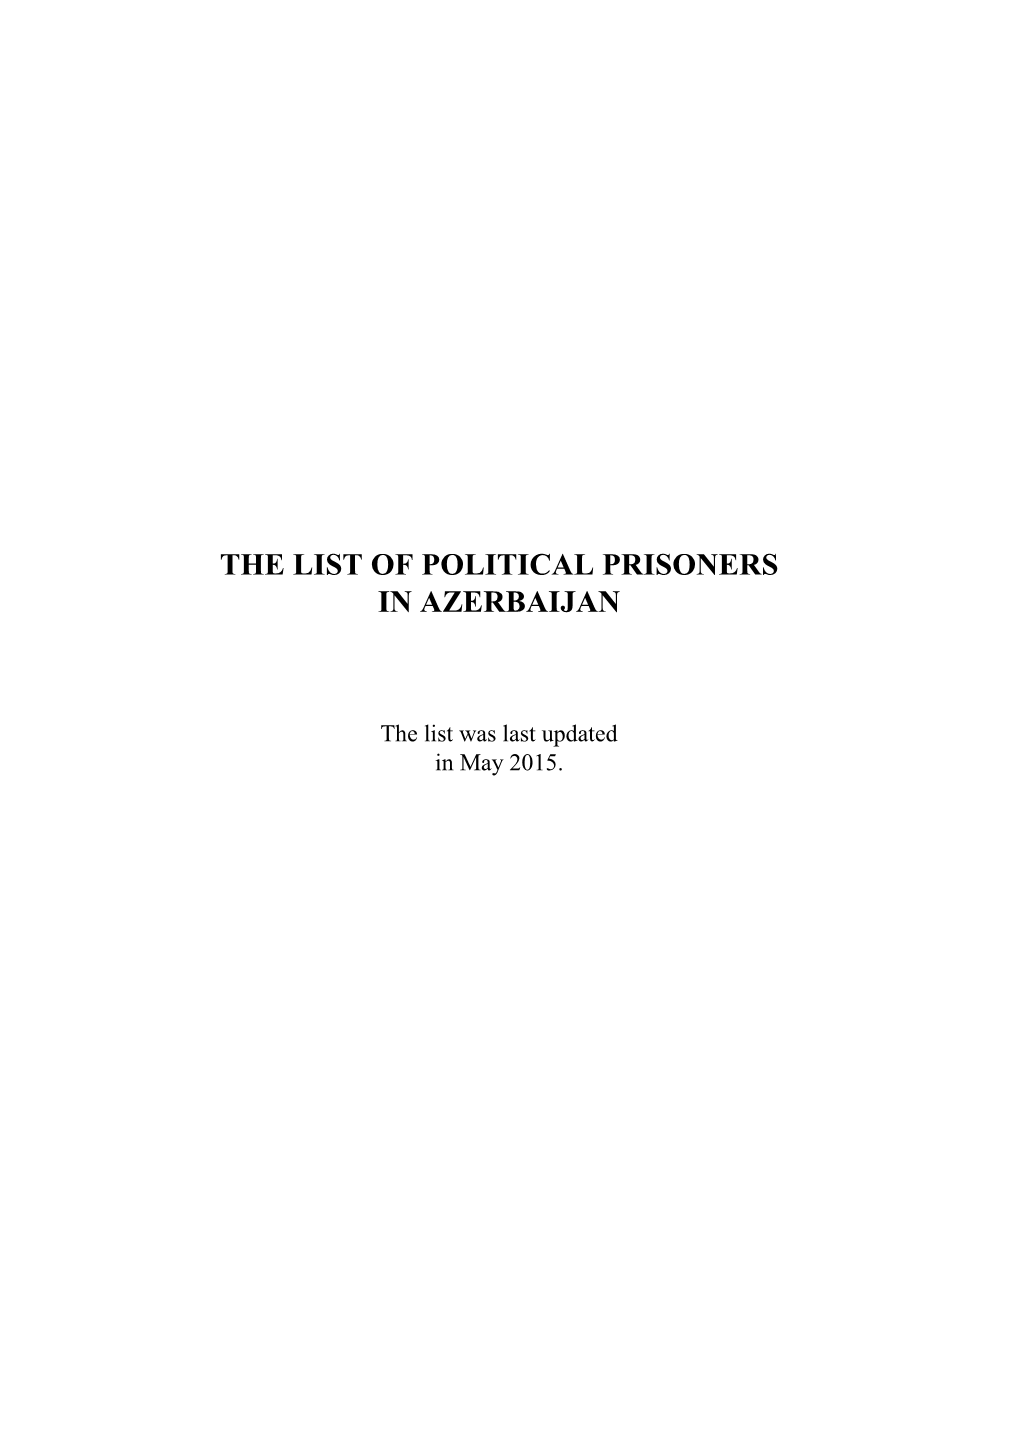 The List of Political Prisoners in Azerbaijan